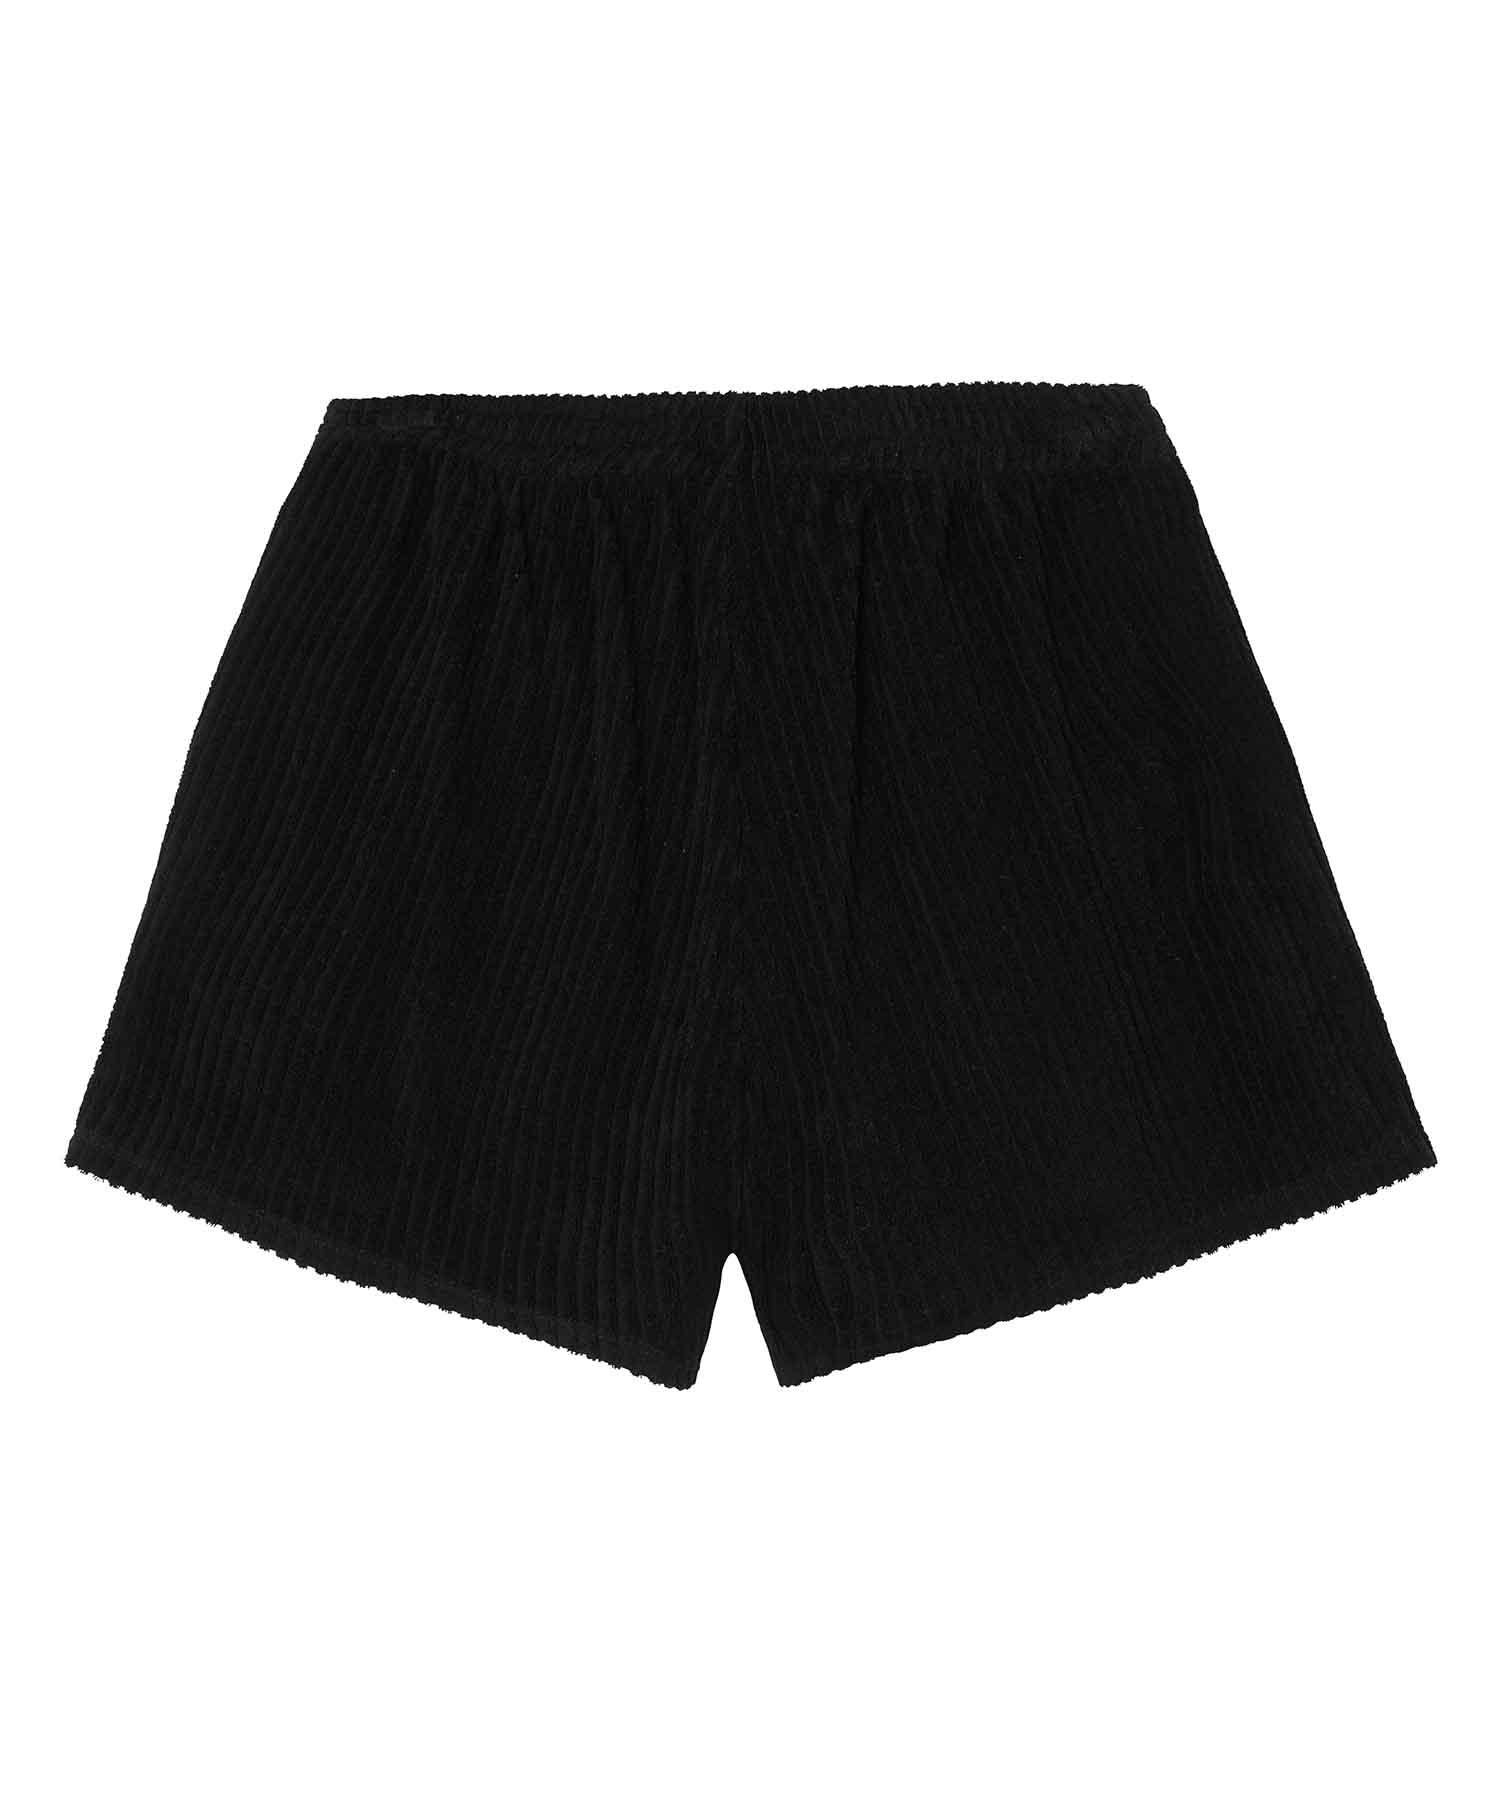 Entyinea Girls Shorts Casual Baggy Short Elastic Waist Drawstring Comfy  Shorts Black Size 80 - Walmart.com